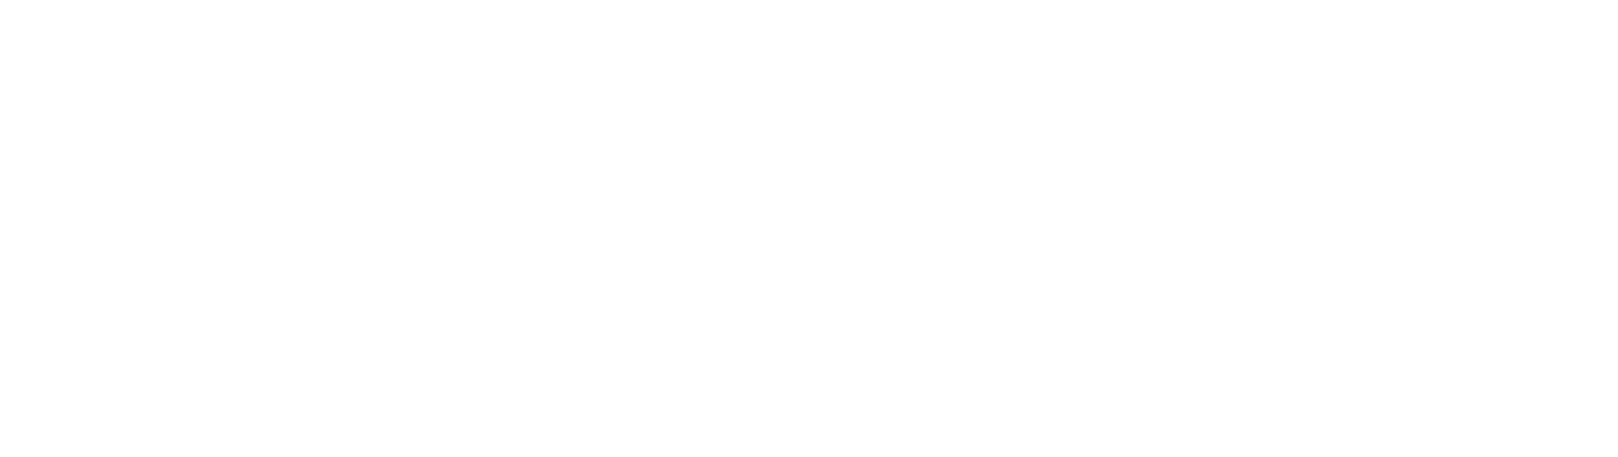 bgsu logo in white on background of orange